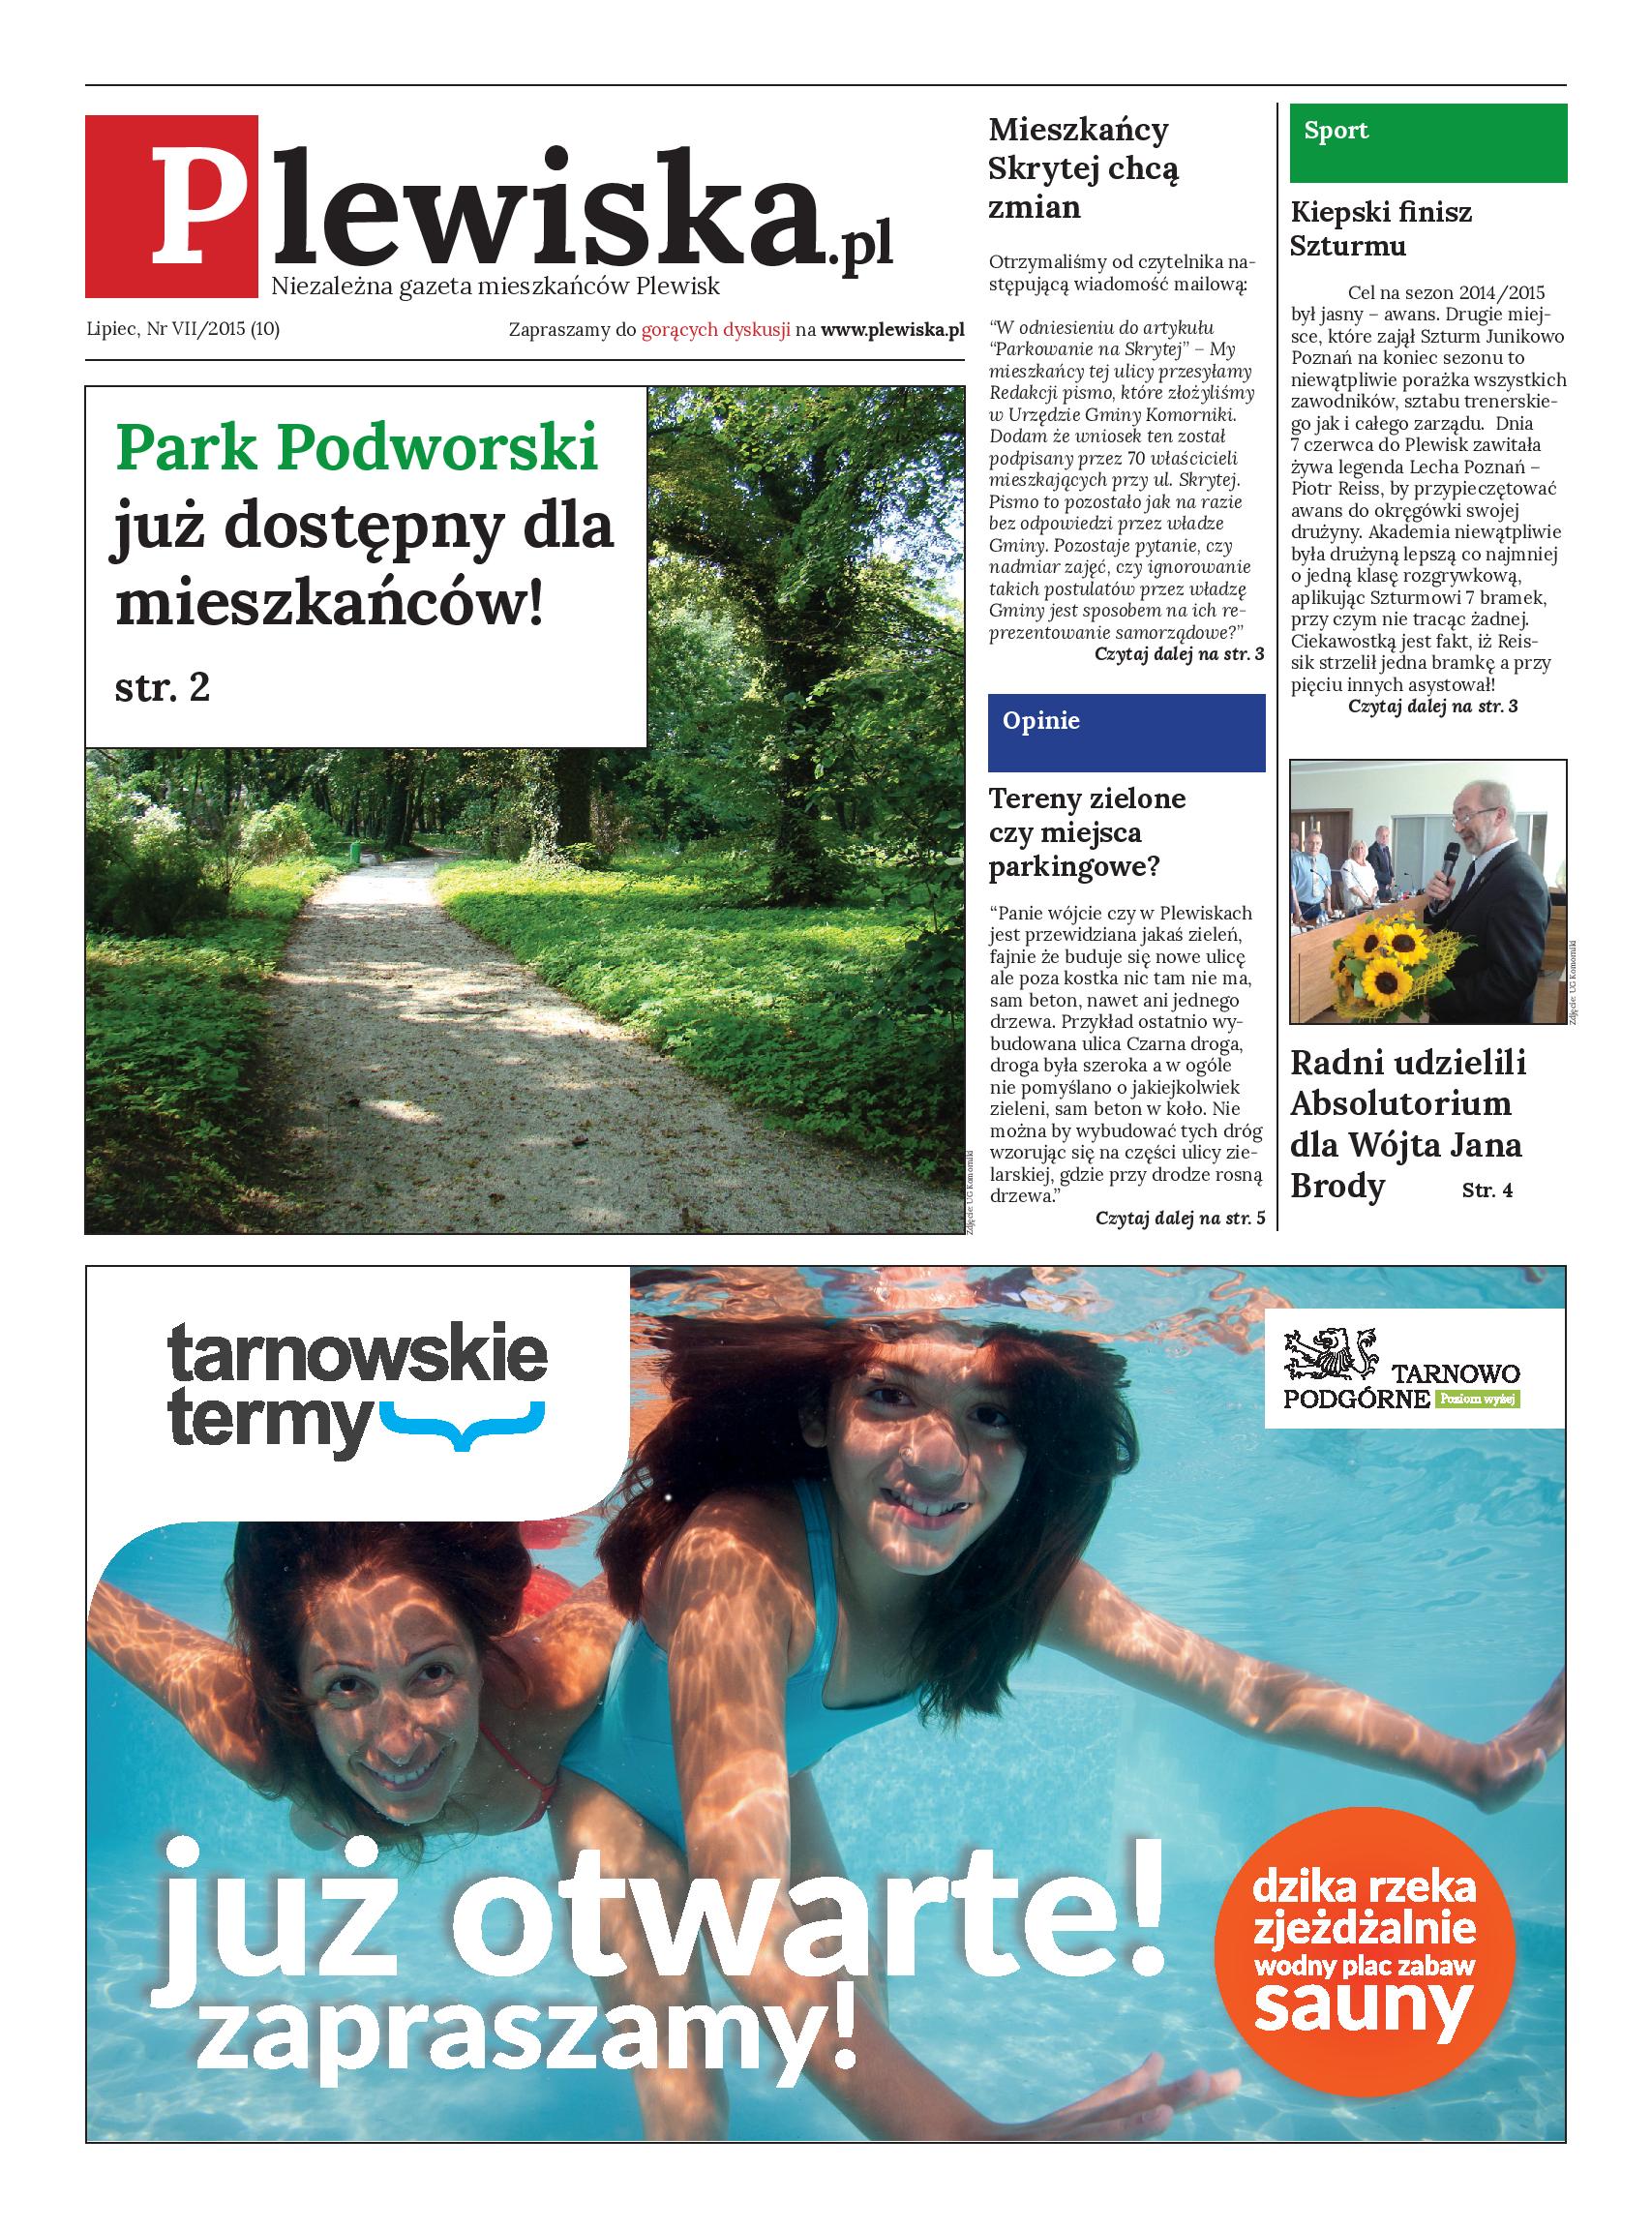 Nowy numer gazety Plewiska.pl